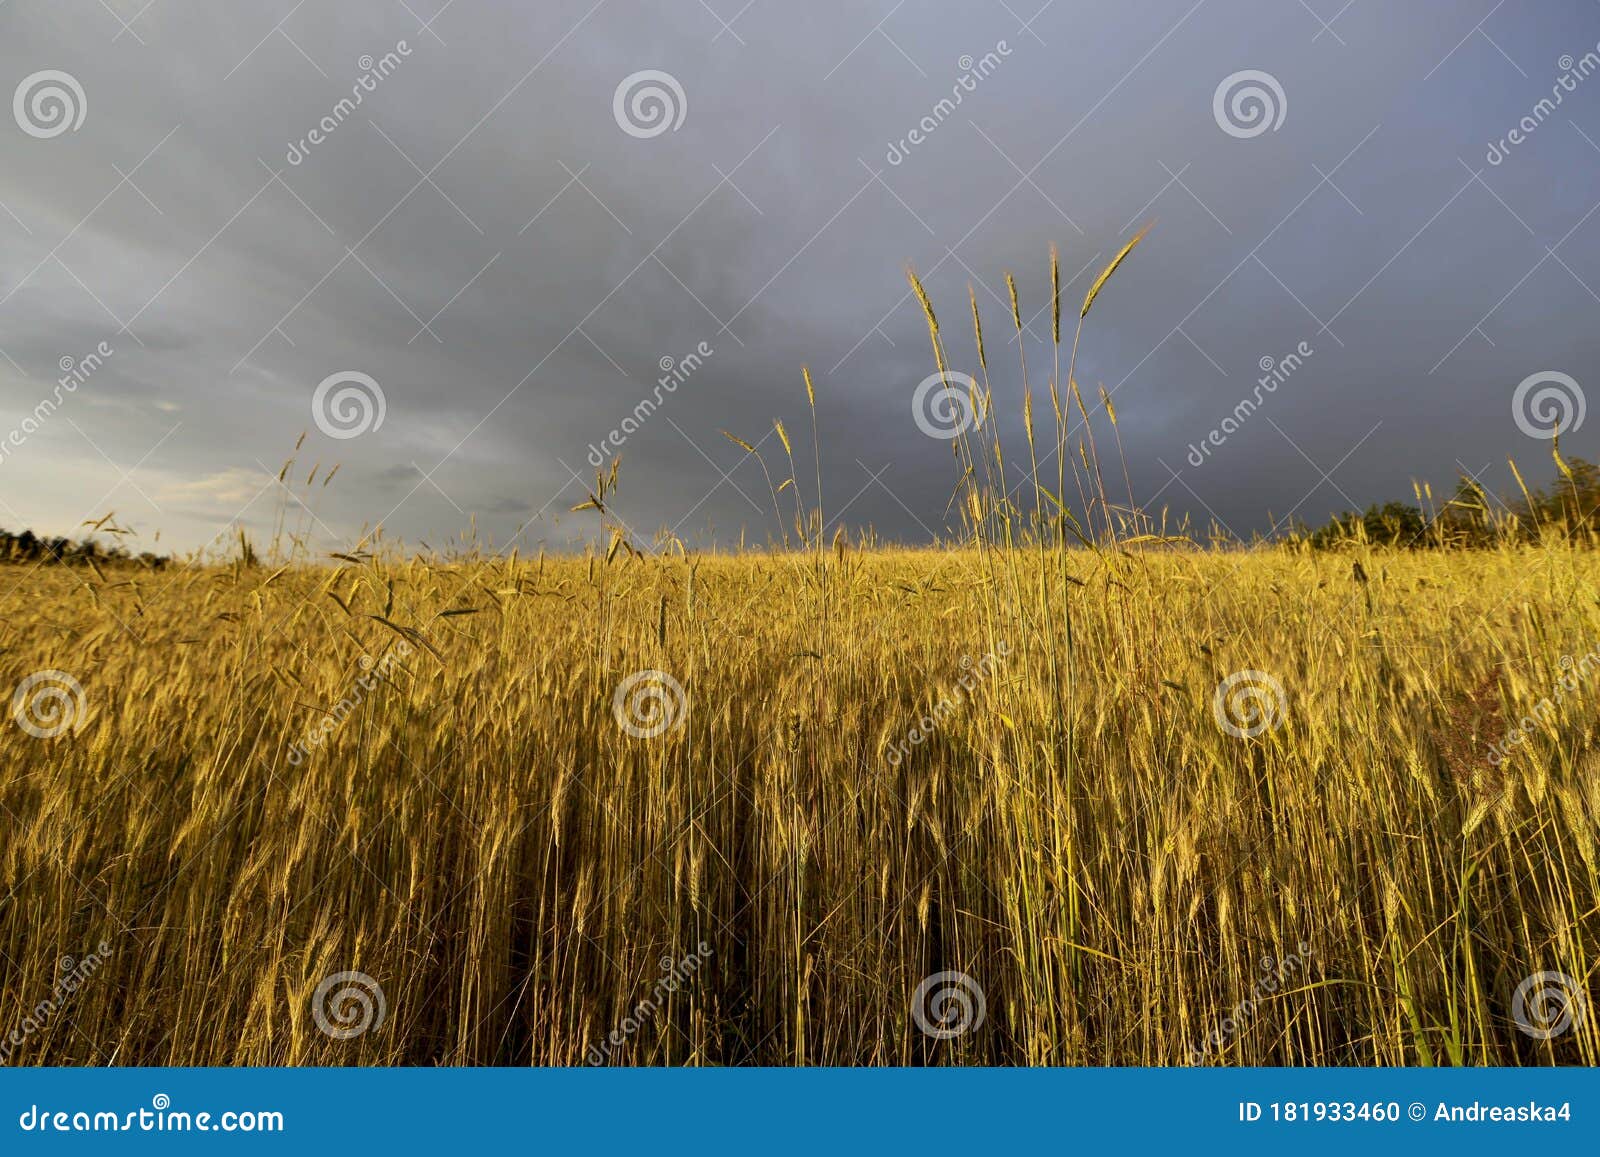 Golden Sunlit Field of Grain and Sky with Dark Rain Clouds. Stock Photo